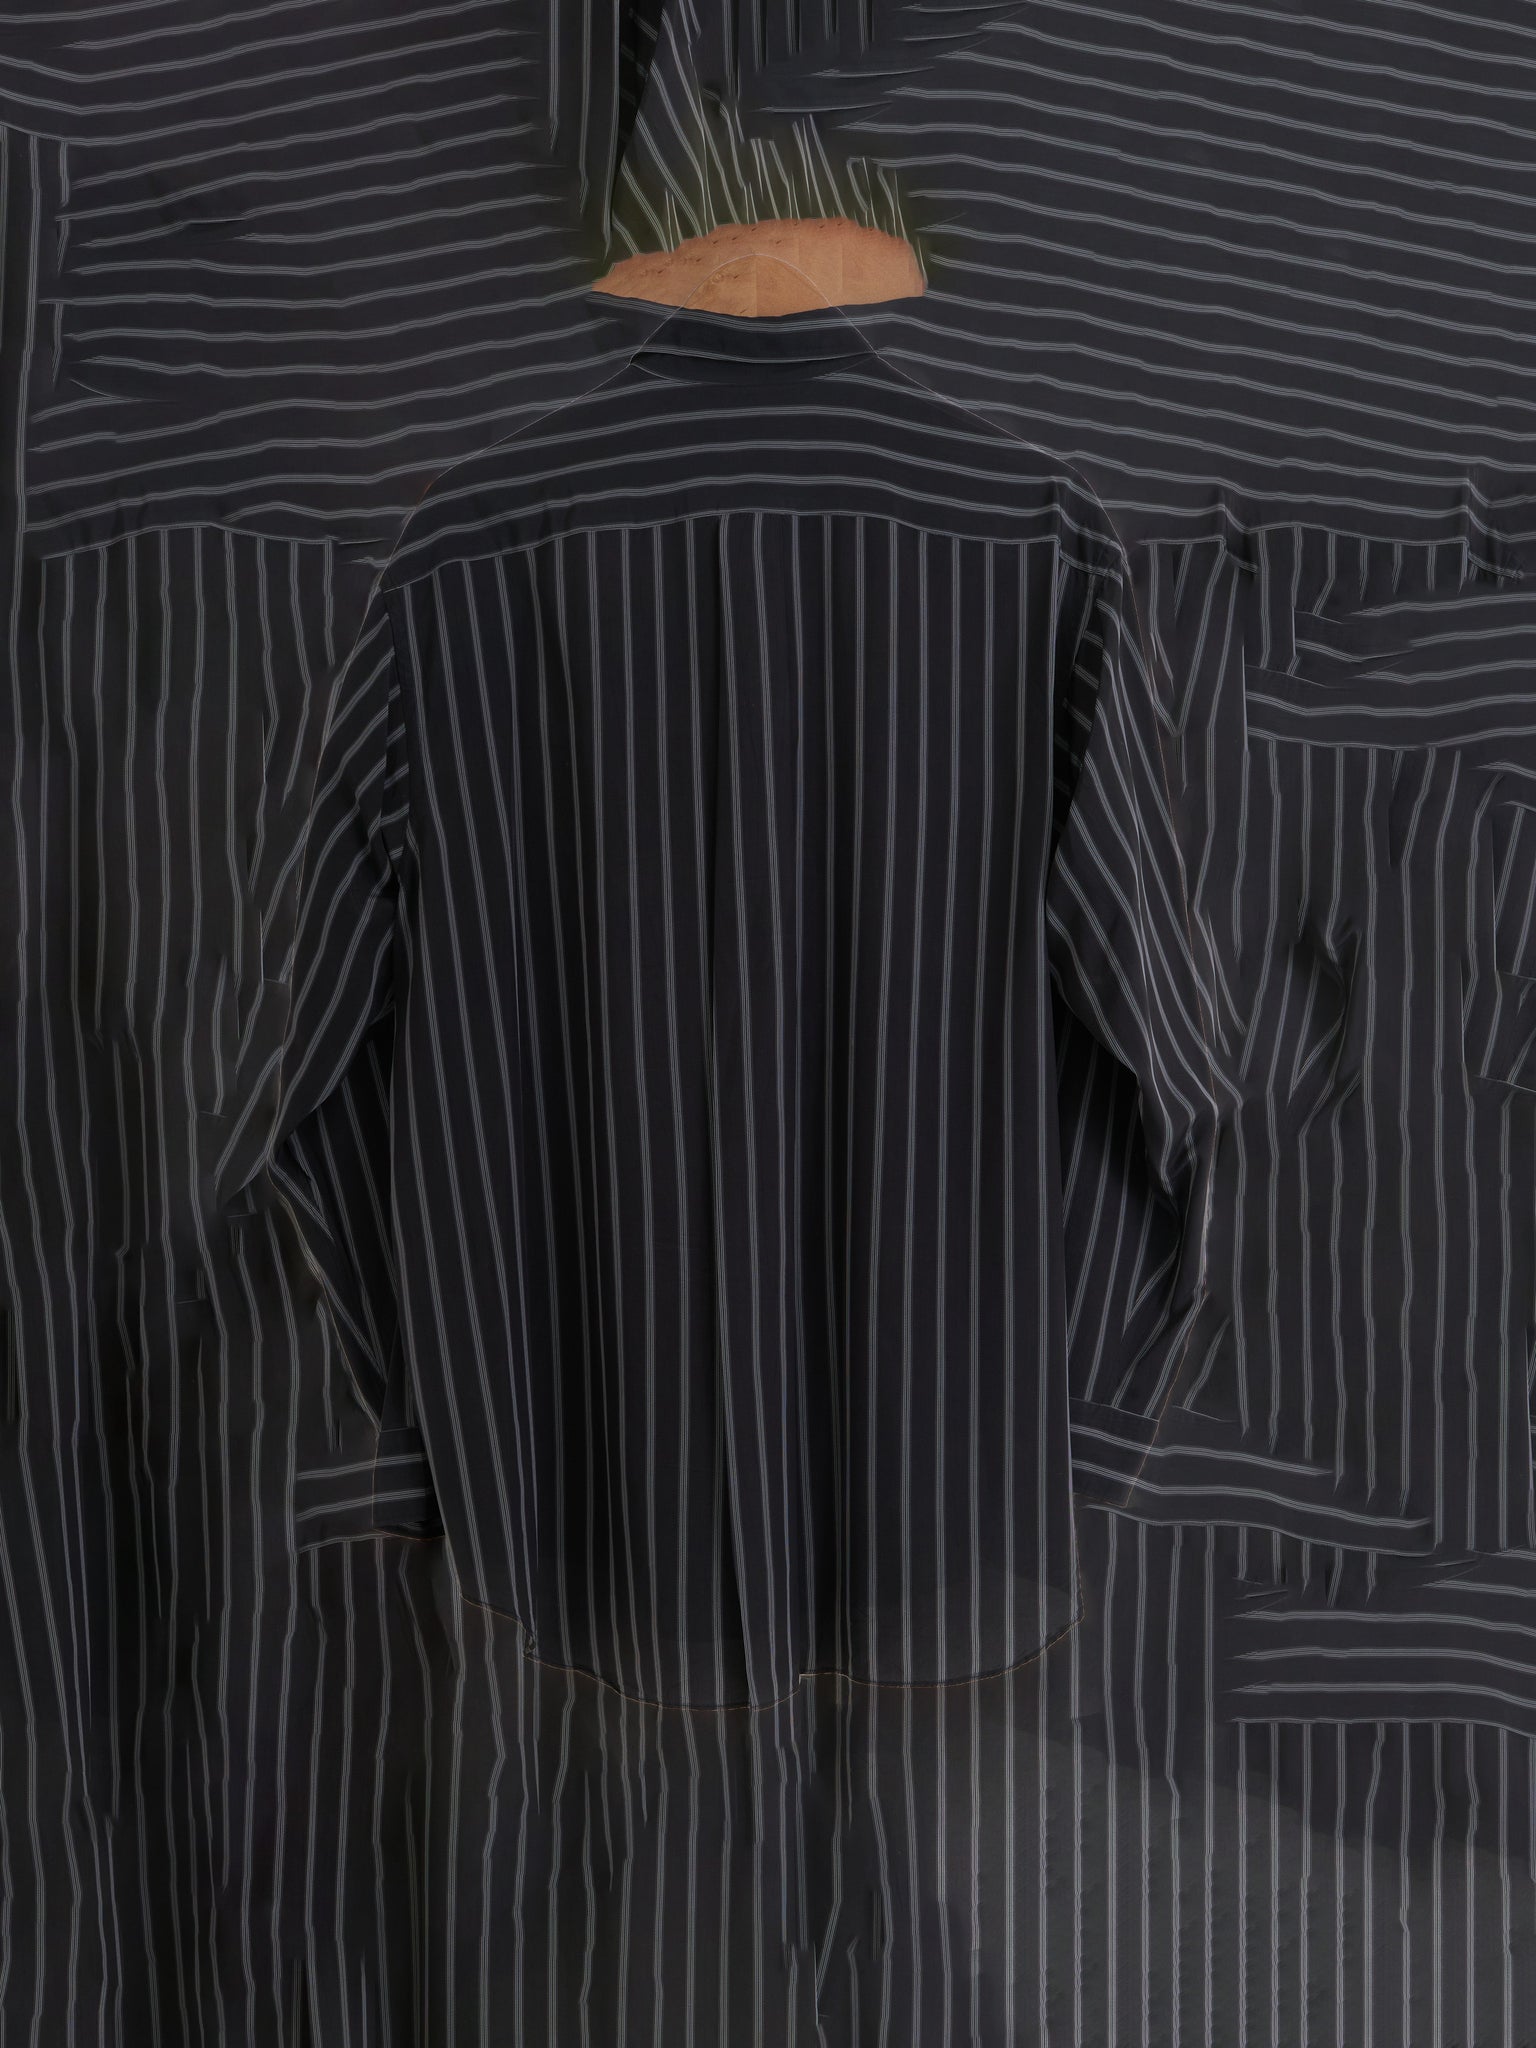 Comme des Garcons Homme 1980s black rayon striped long sleeve shirt - size M L